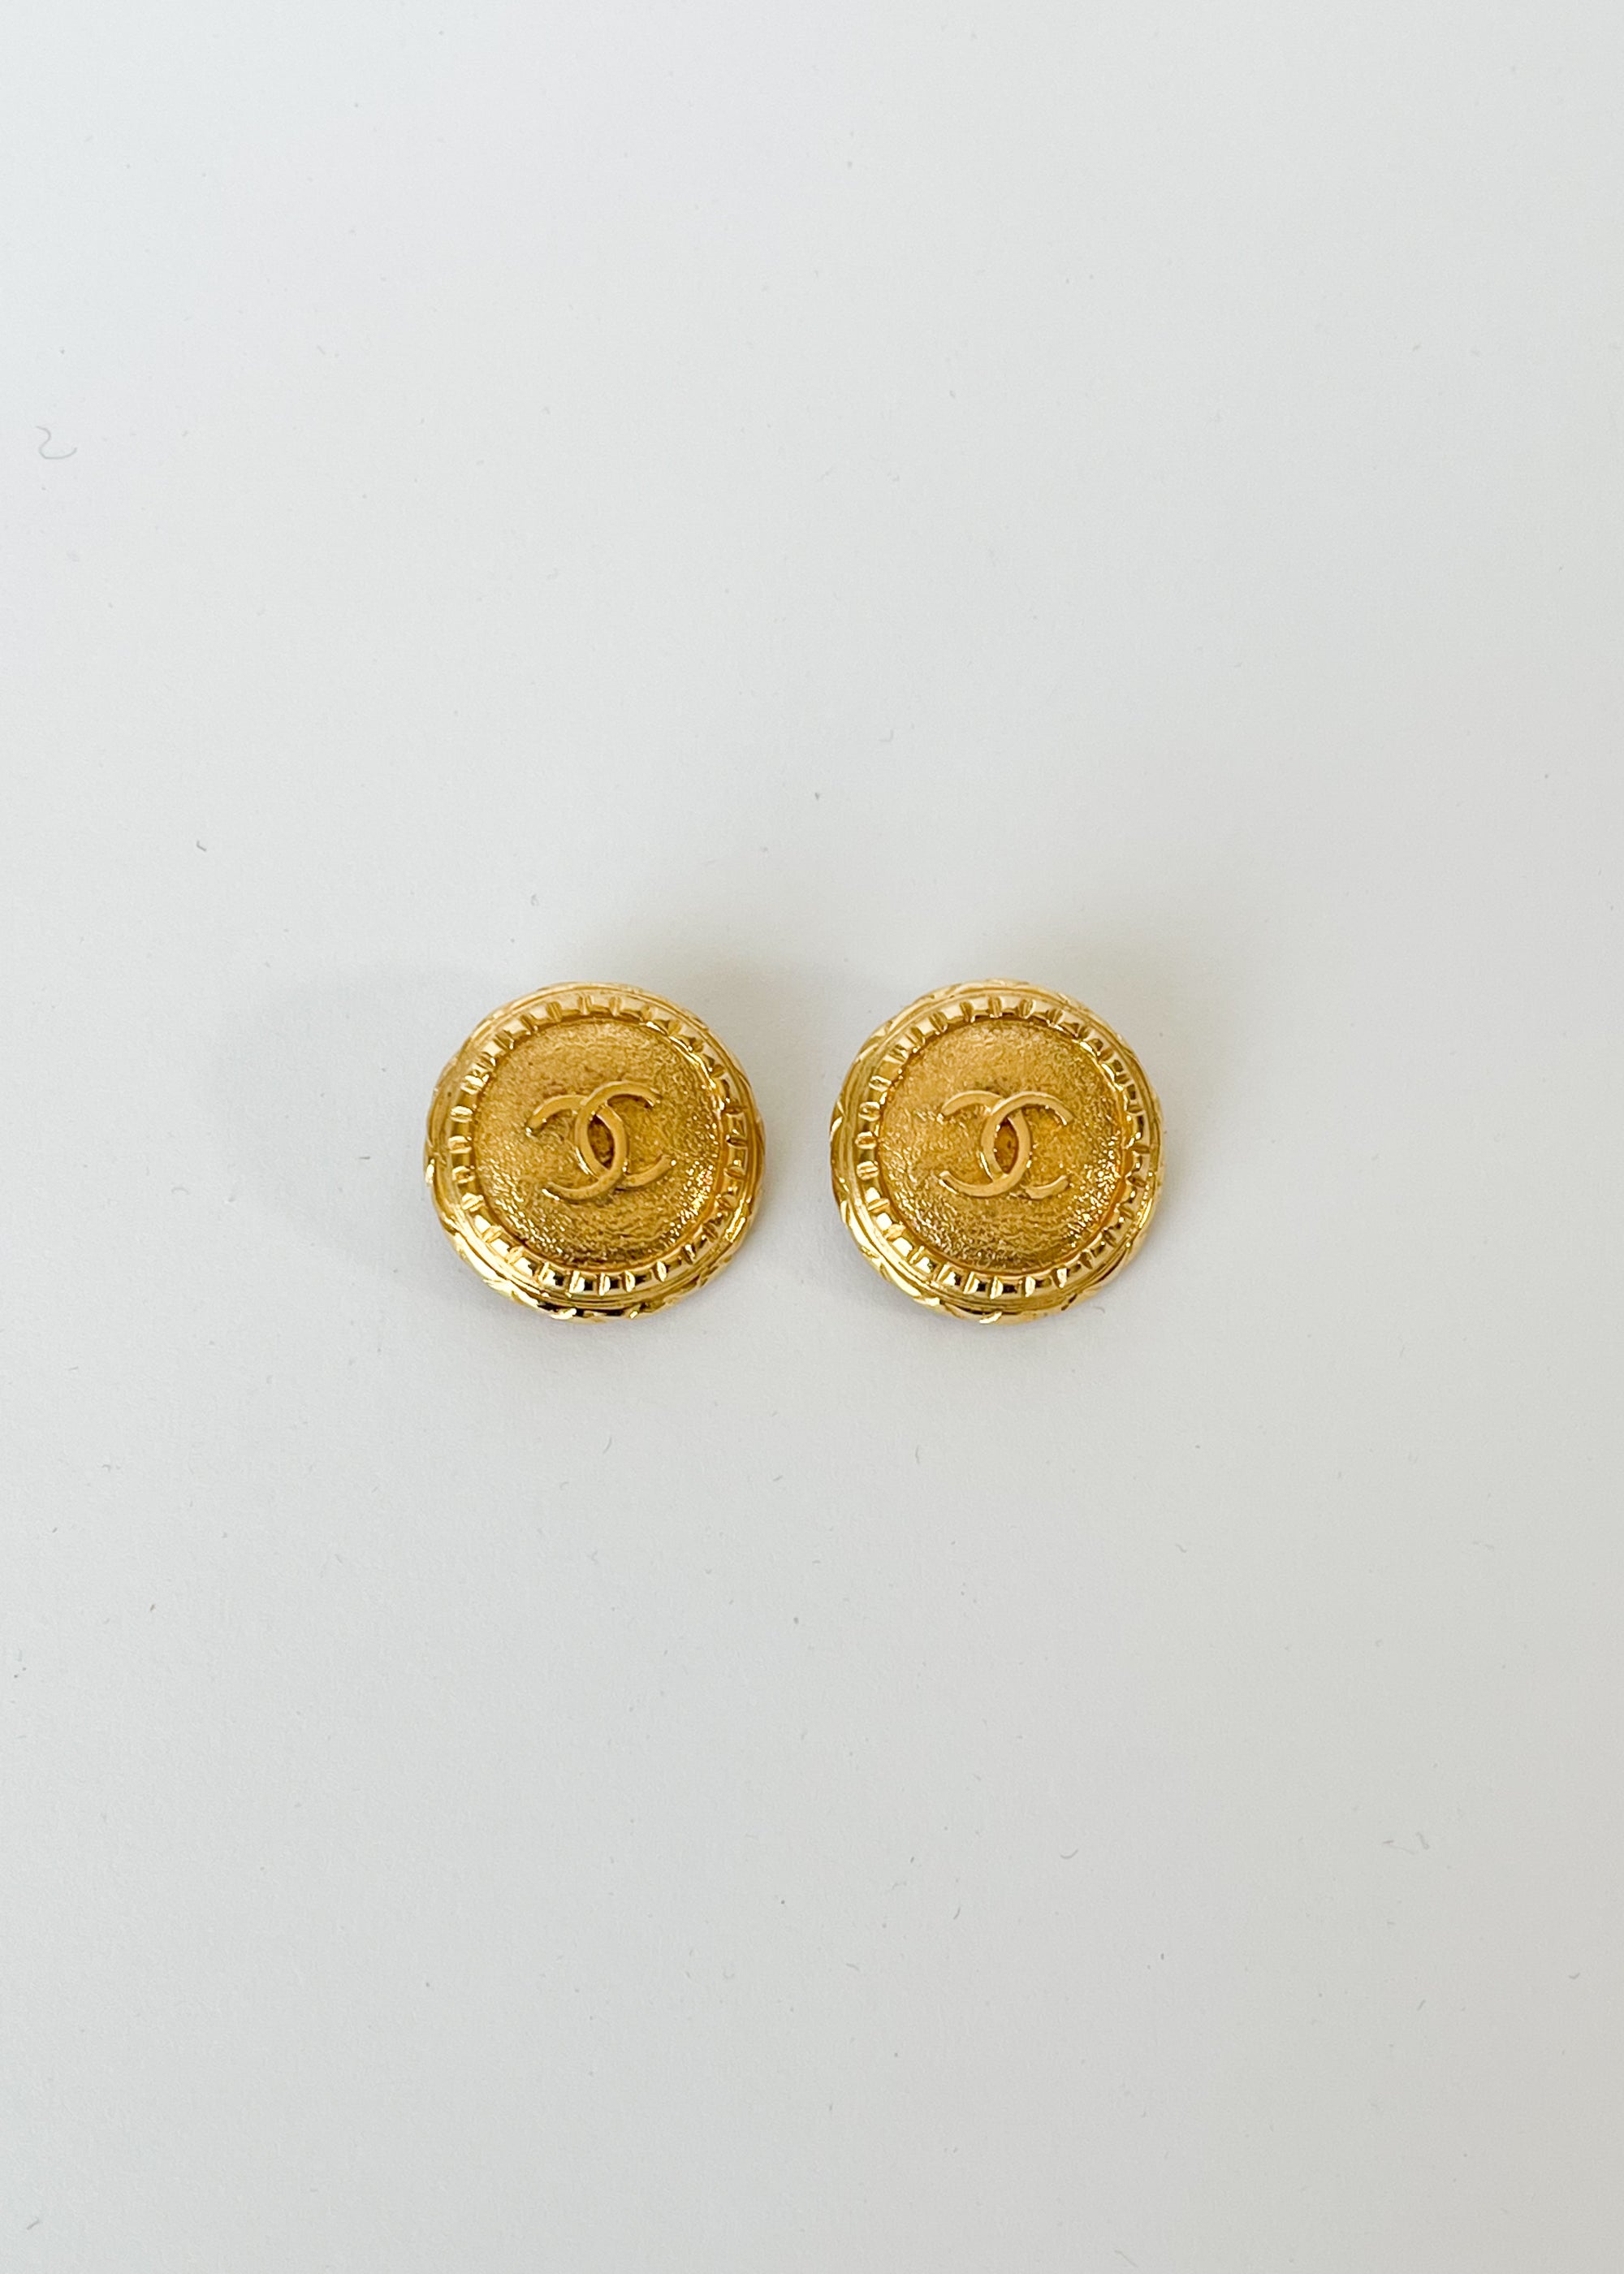 Used Luxury Item: gold Chanel stud earrings  Chanel stud earrings, Gold  chanel, Chanel jewelry